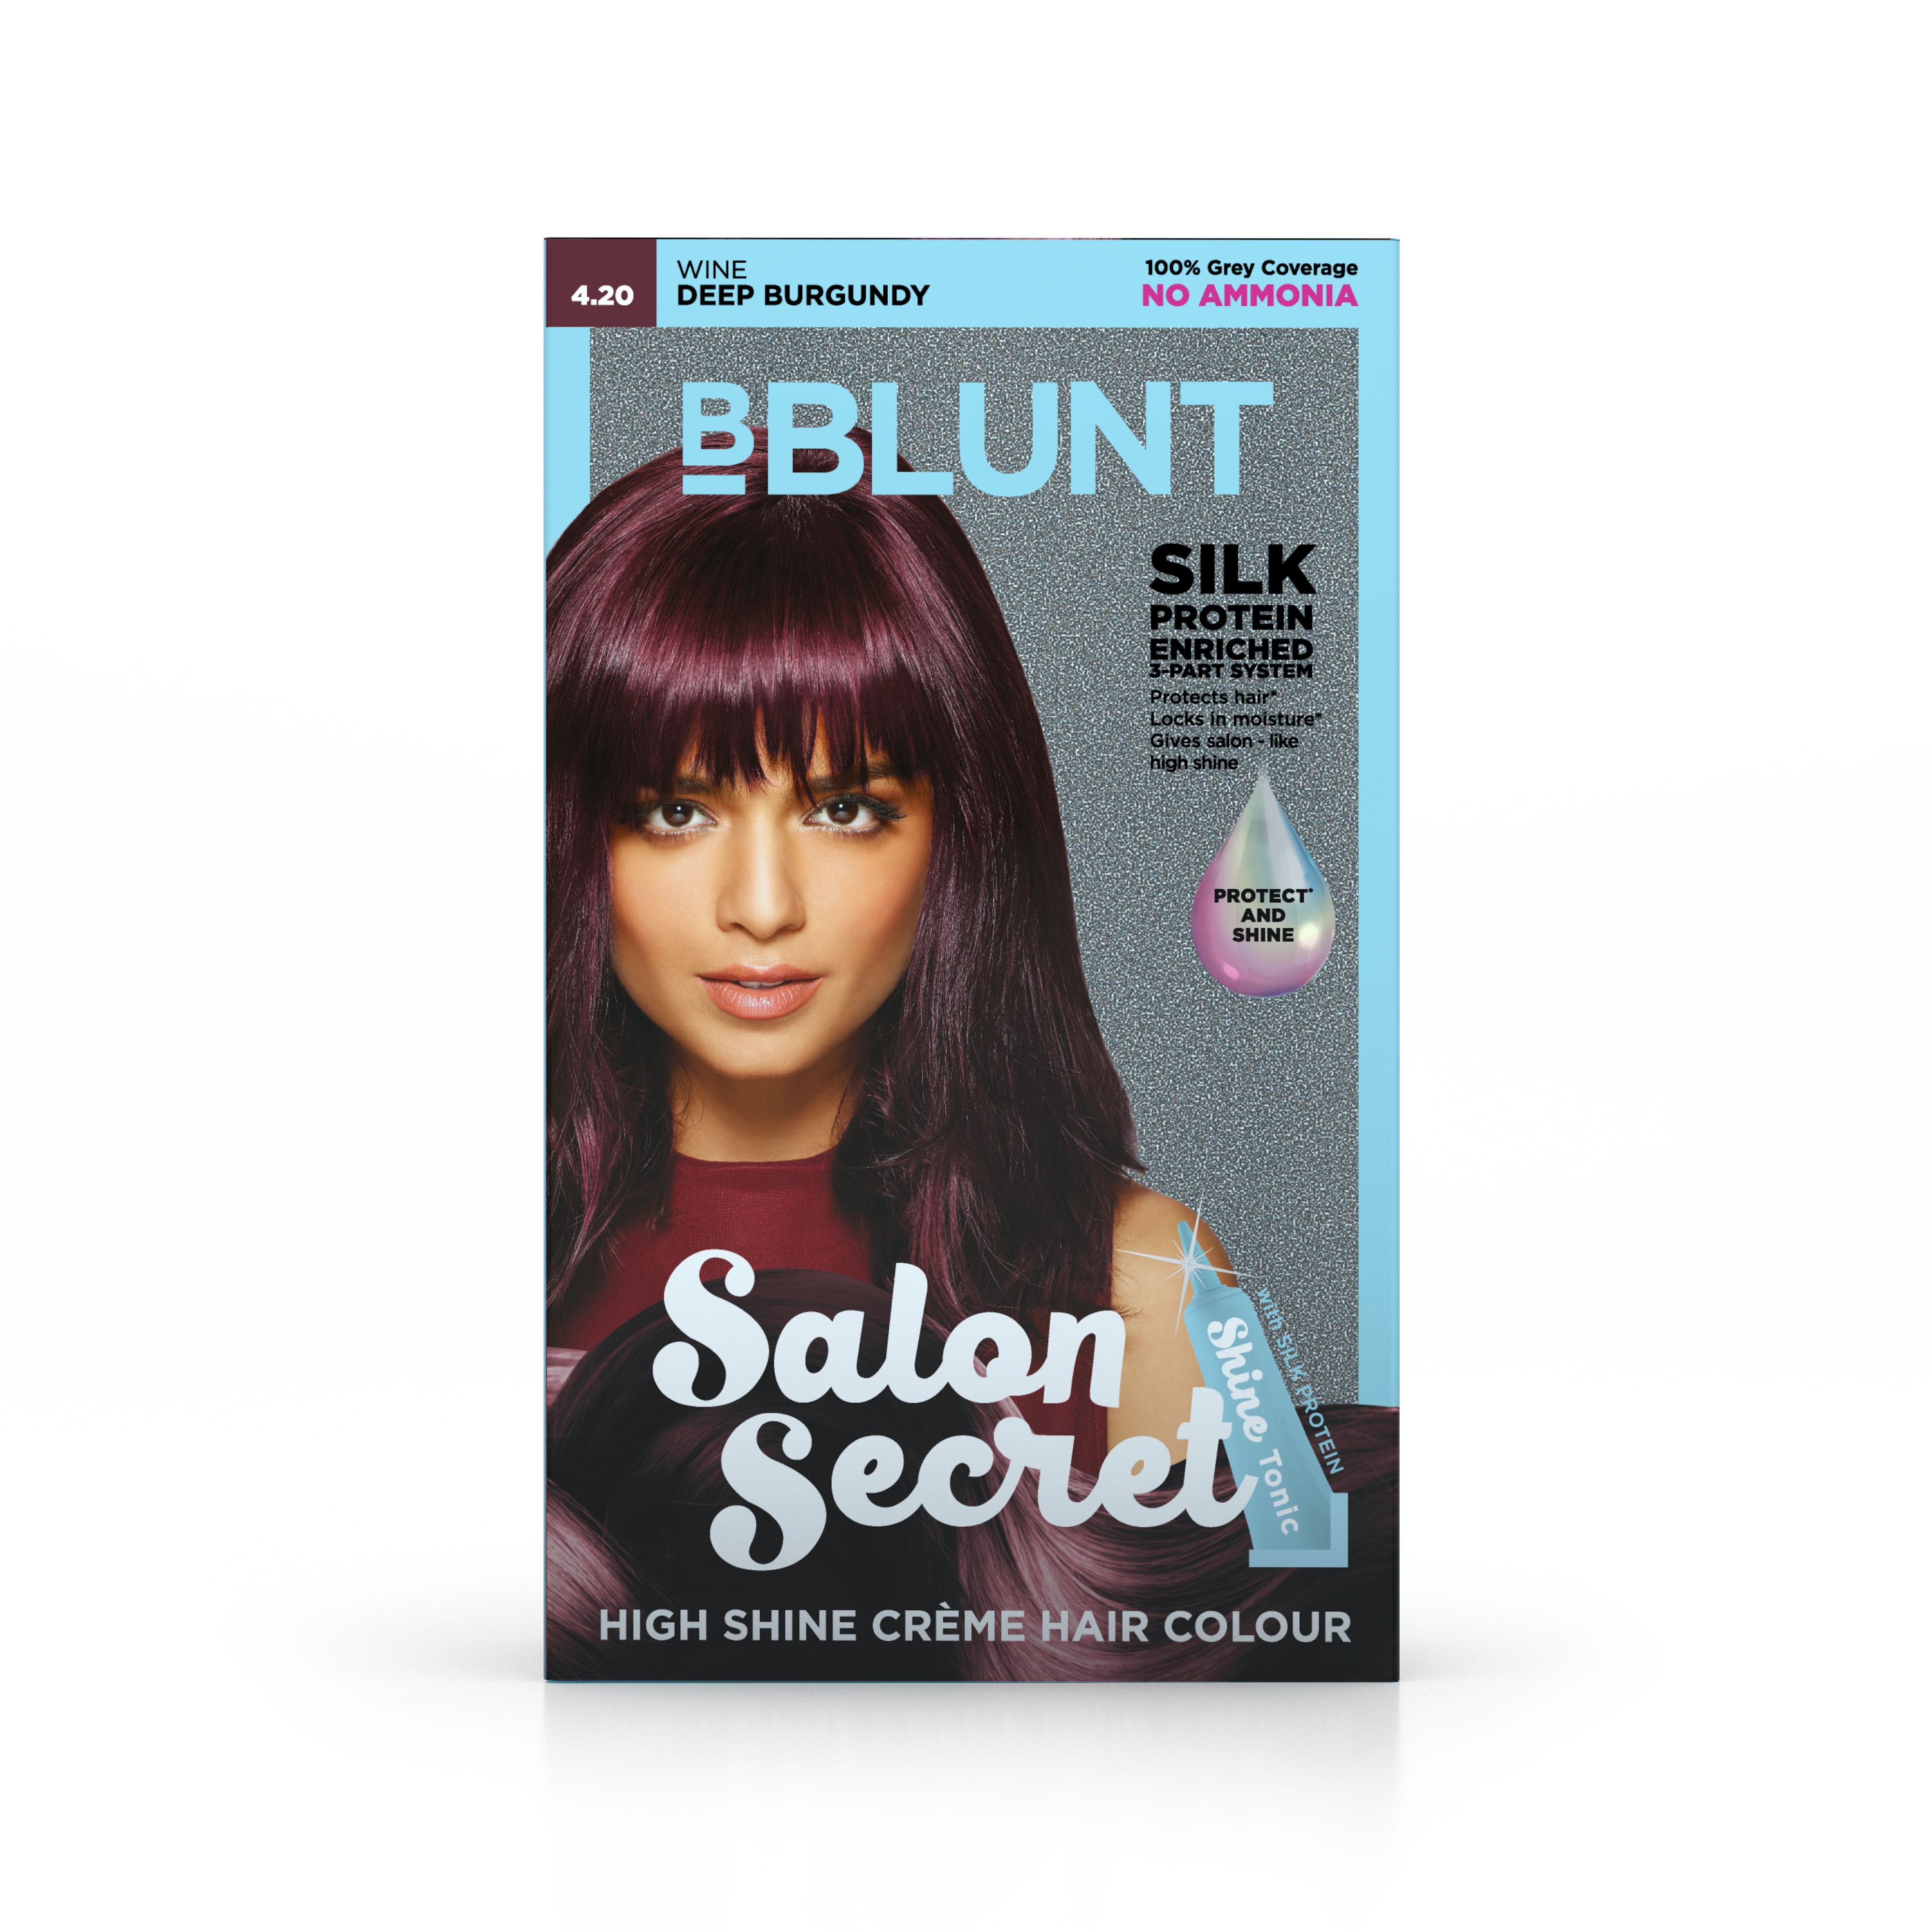 BBLUNT Salon Secret High Shine Creme Hair Colour Wine Deep Burgundy 4,20,  No Ammonia Reviews Online | Nykaa